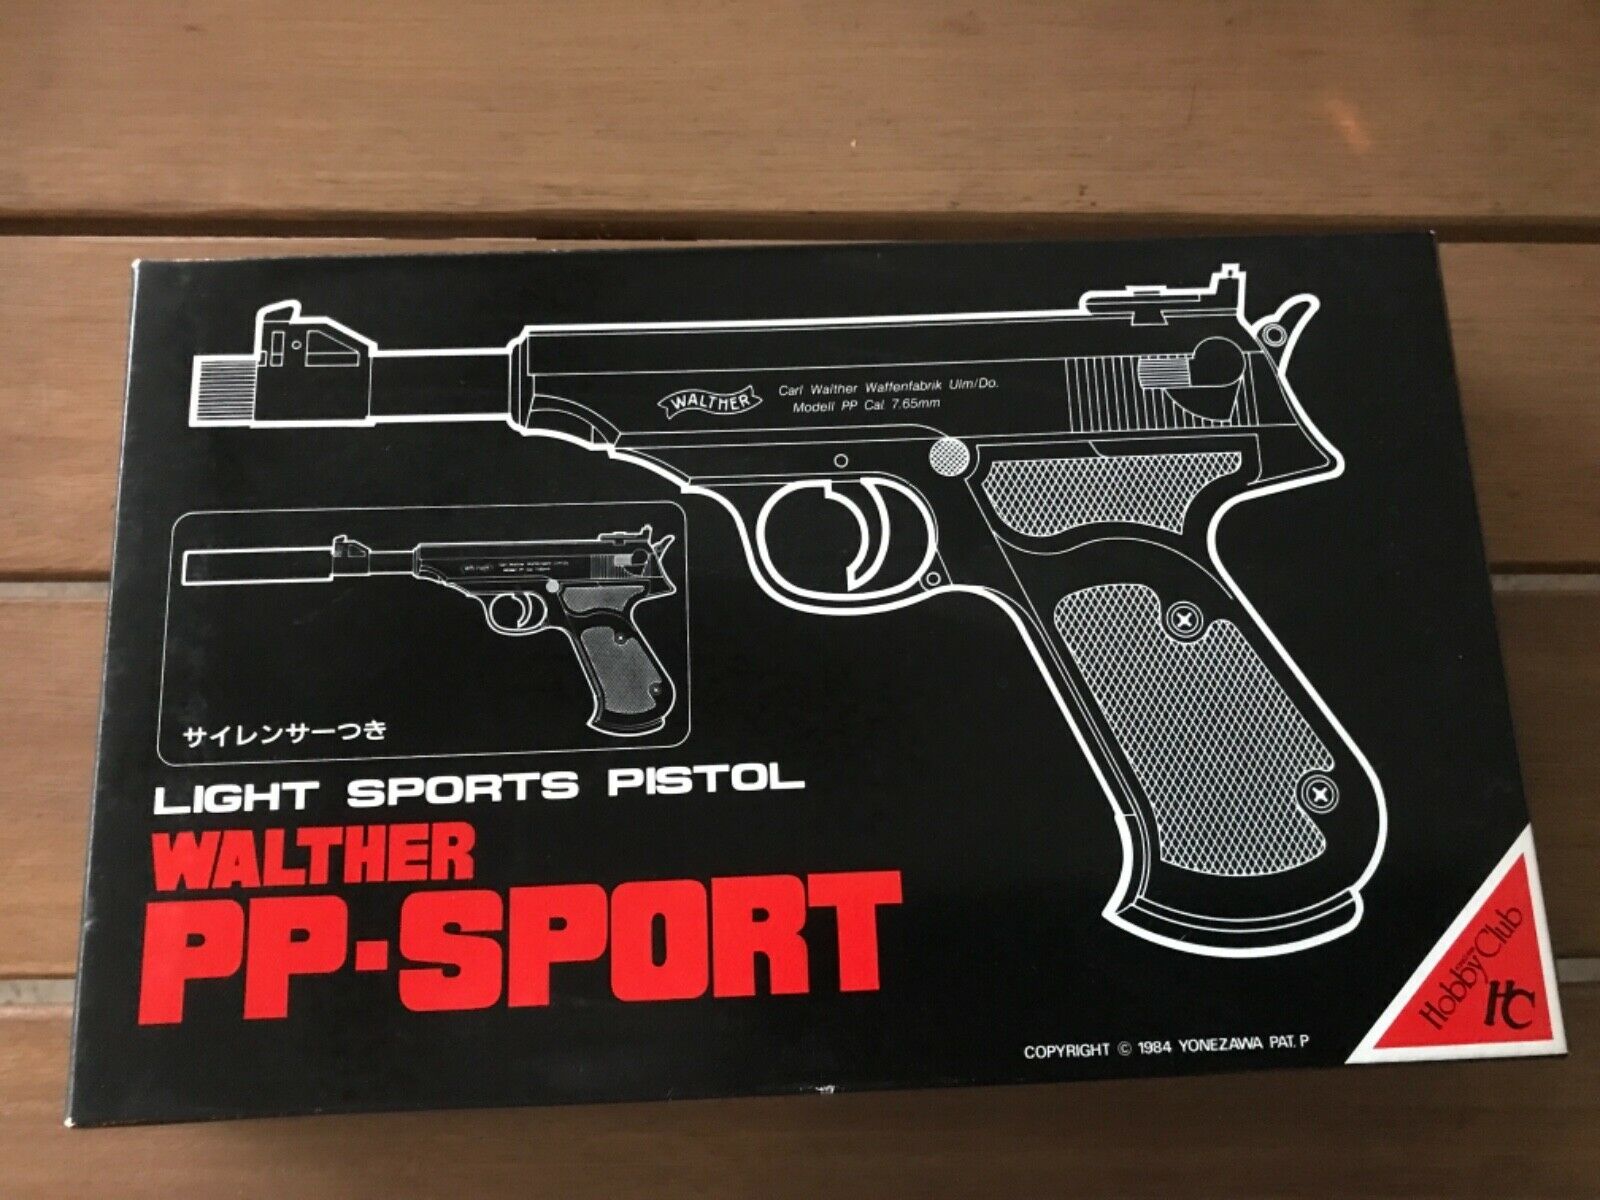 Rare Yonezawa mod.Walther PP-SPORT light sports air soft pistol made in Japan